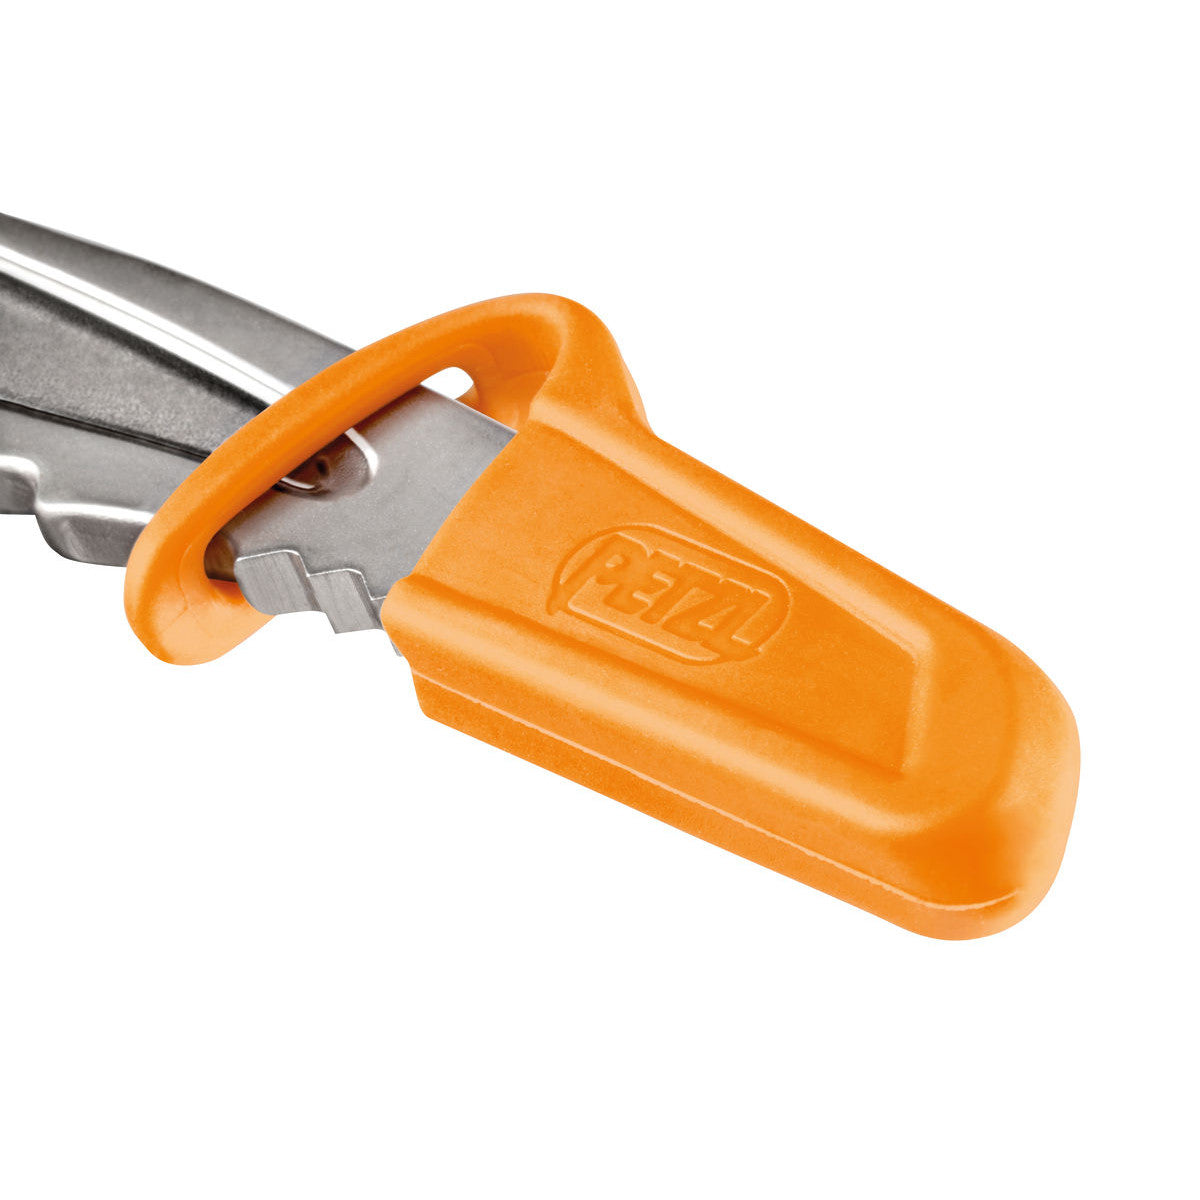 Petzl Pick Protector shown on silver pick, in orange